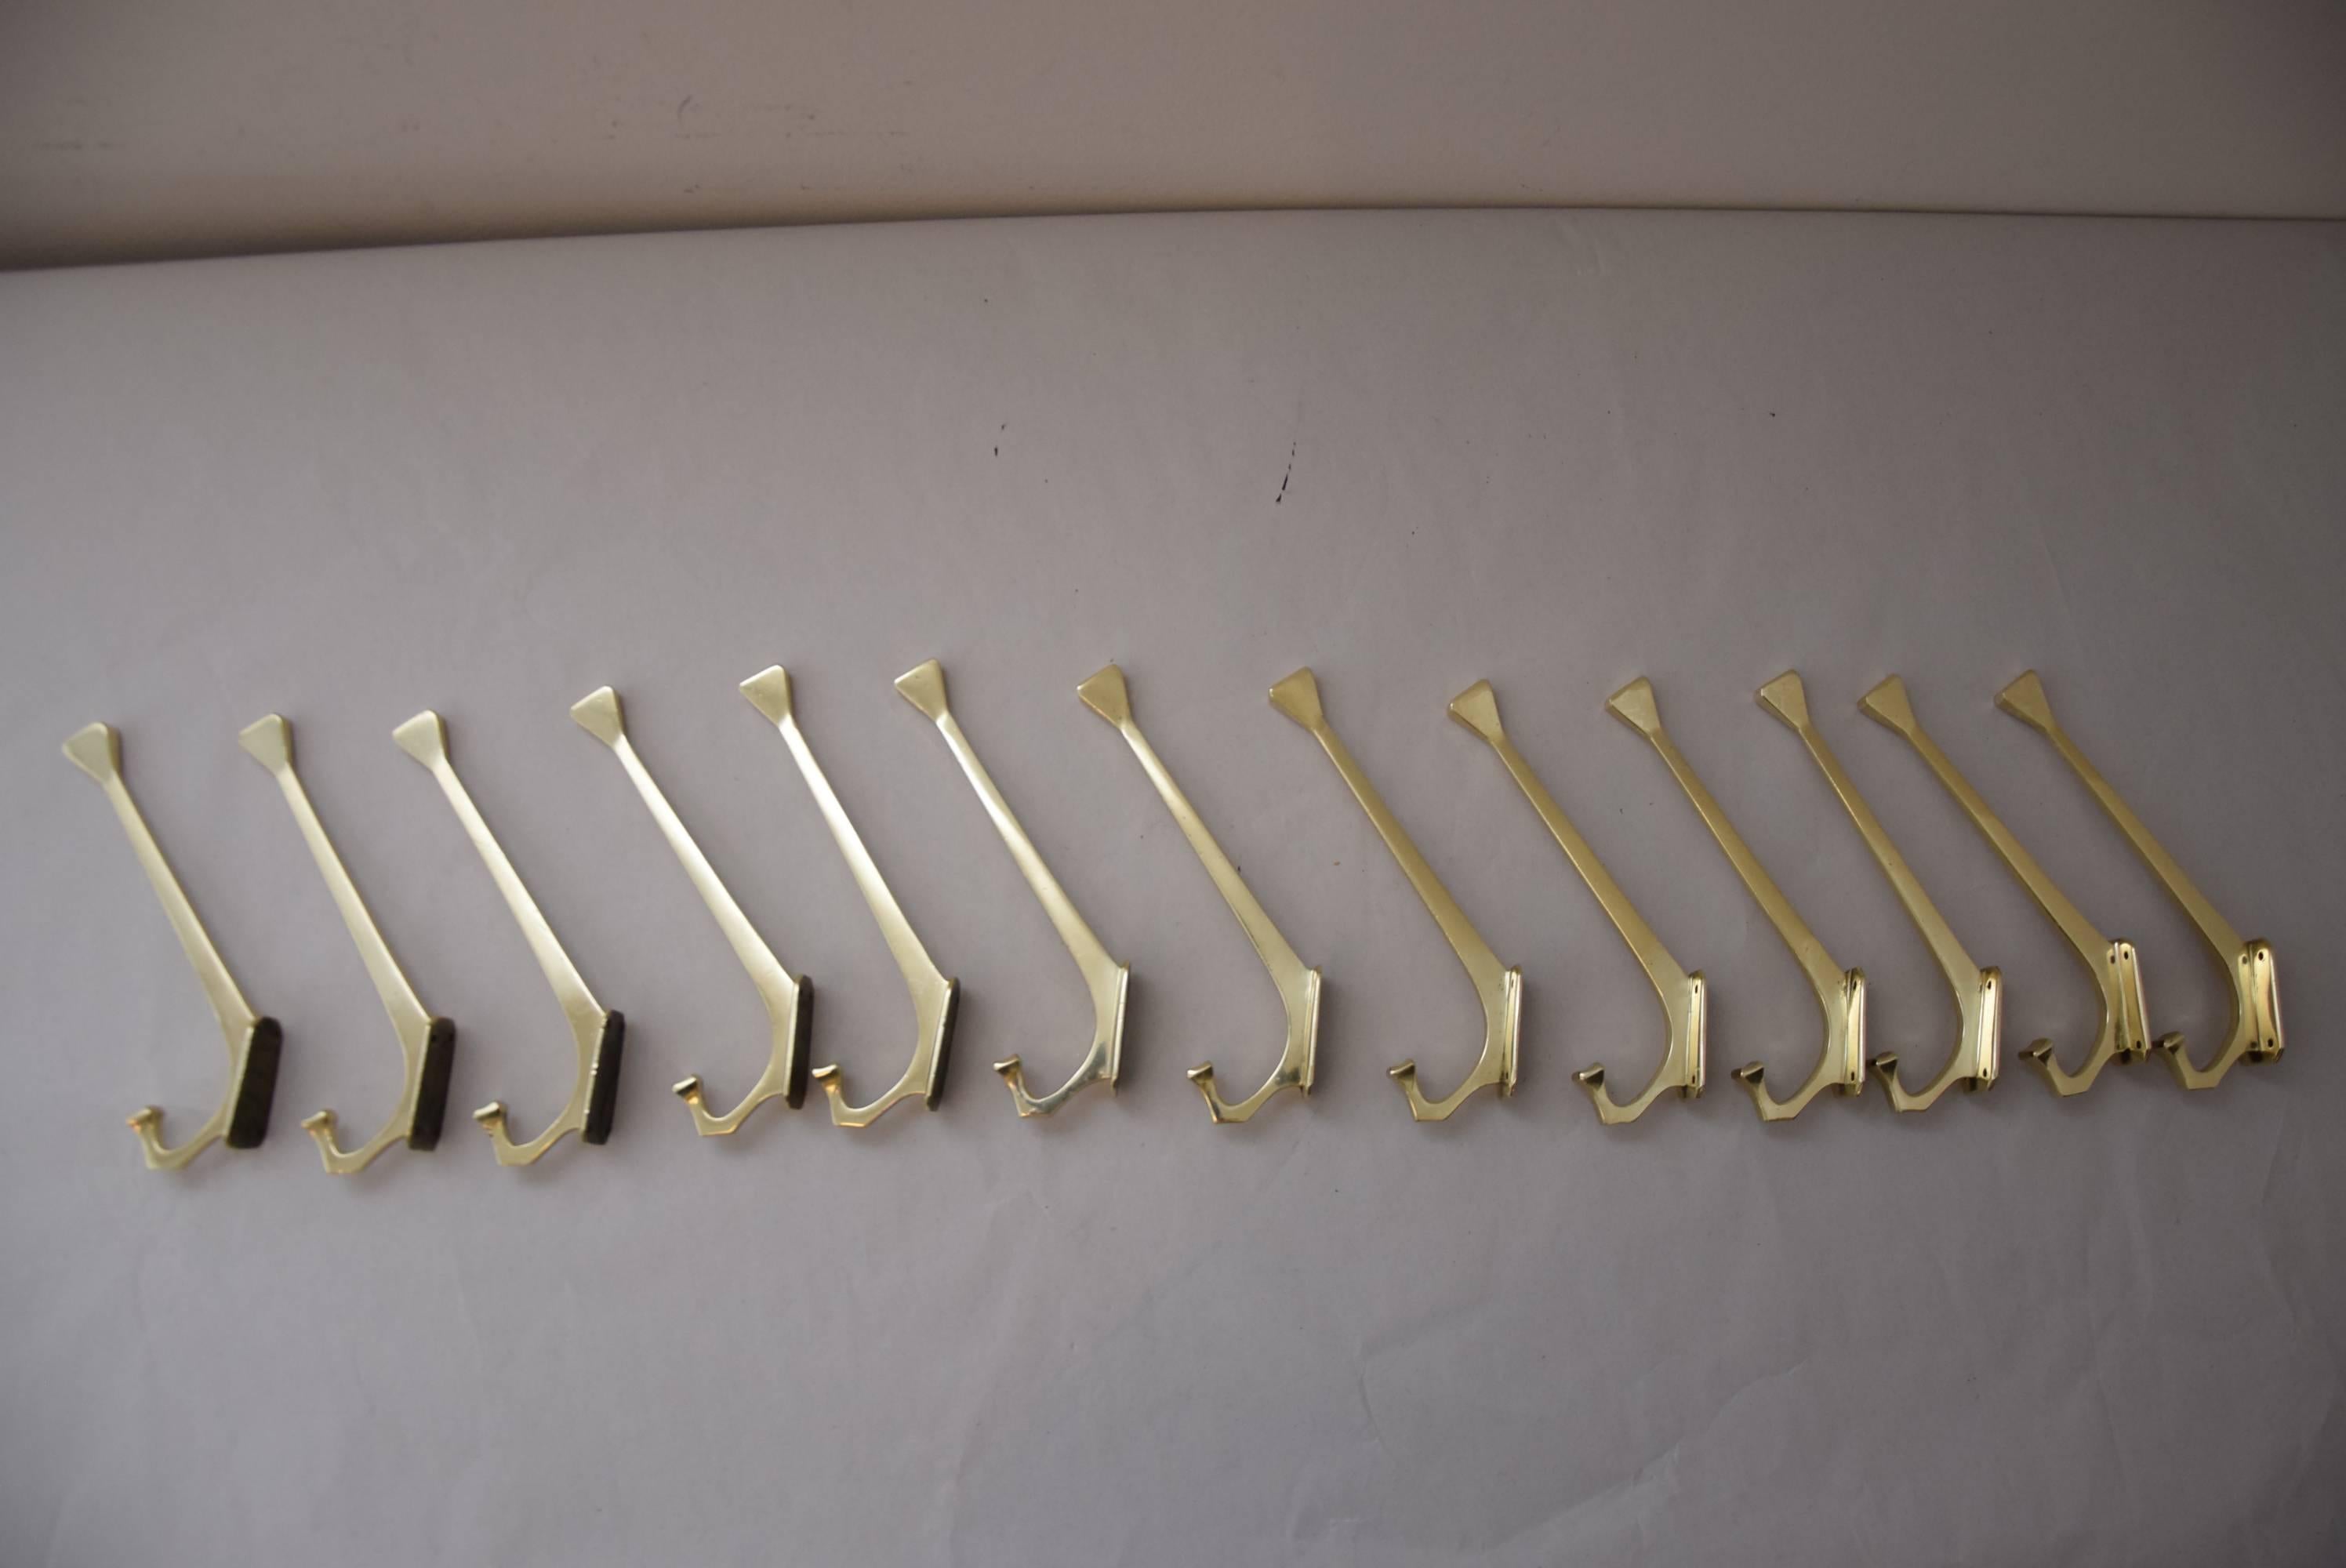 13 jugendstil wall hooks. 
Polished and stove enameled.
priced and sold per piece.

